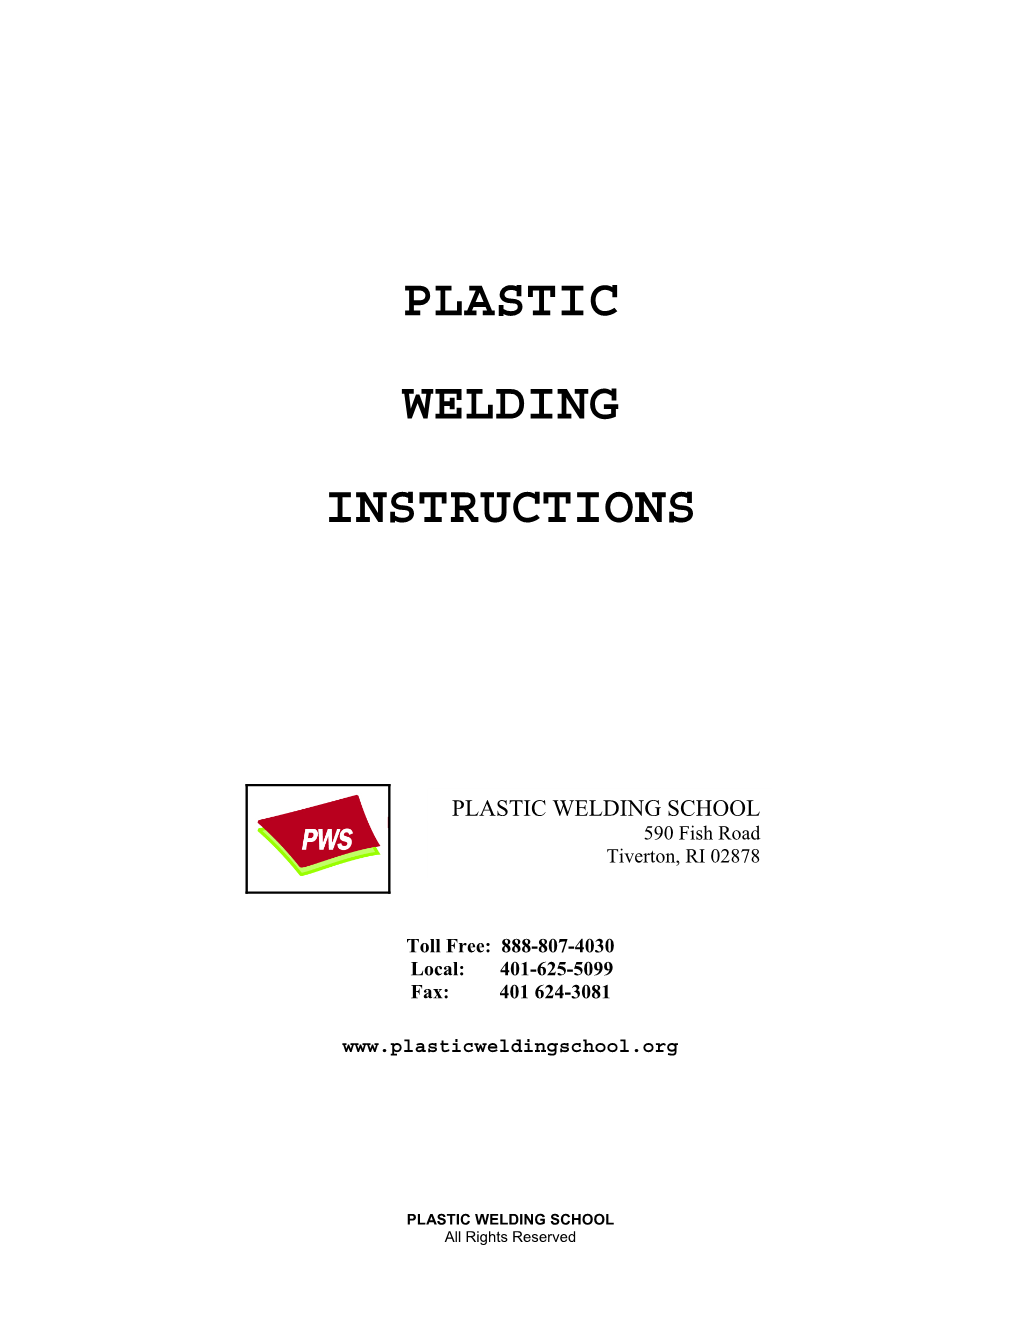 Plastic Welding Instructions